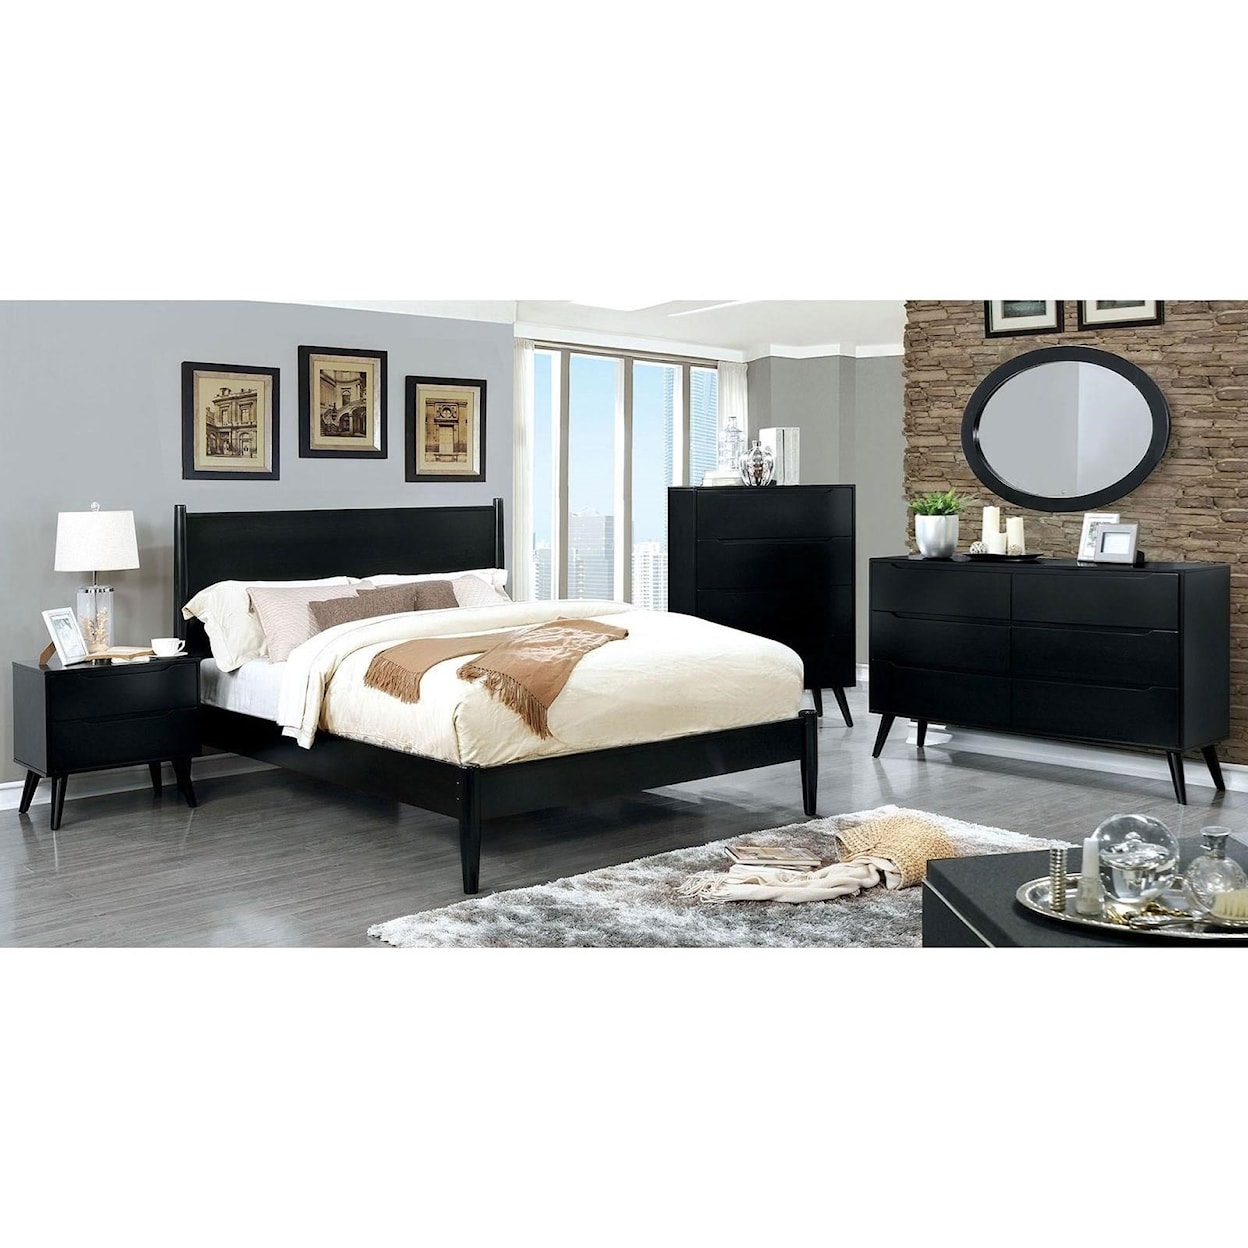 Furniture of America - FOA Lennart California King Bed